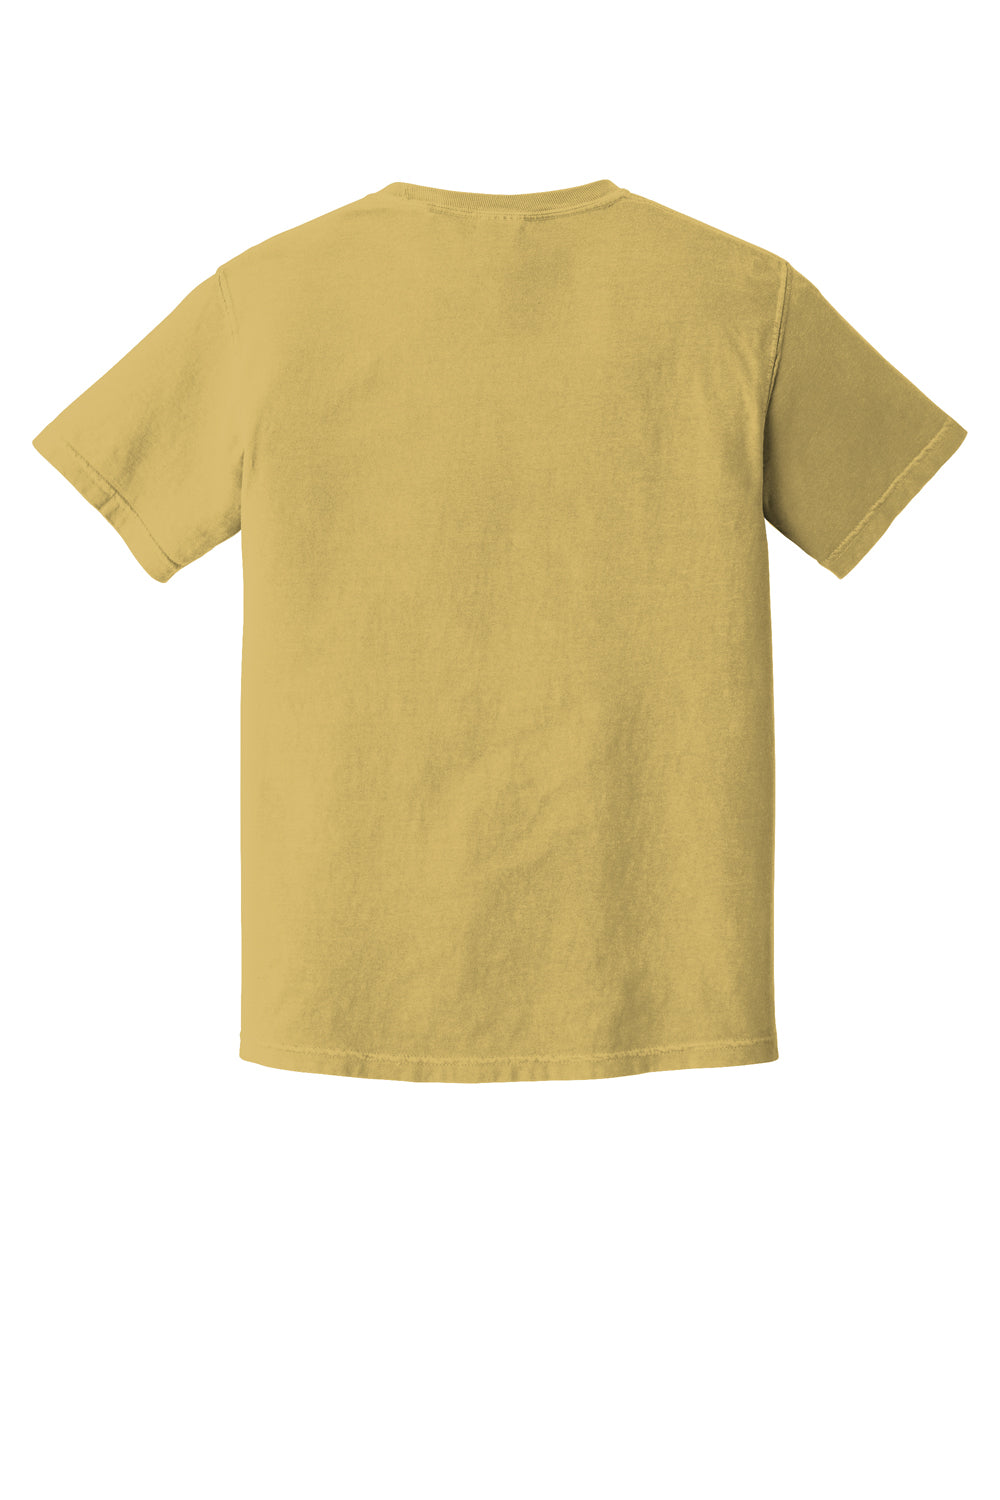 Comfort Colors 1717/C1717 Mens Short Sleeve Crewneck T-Shirt Mustard Yellow Flat Back